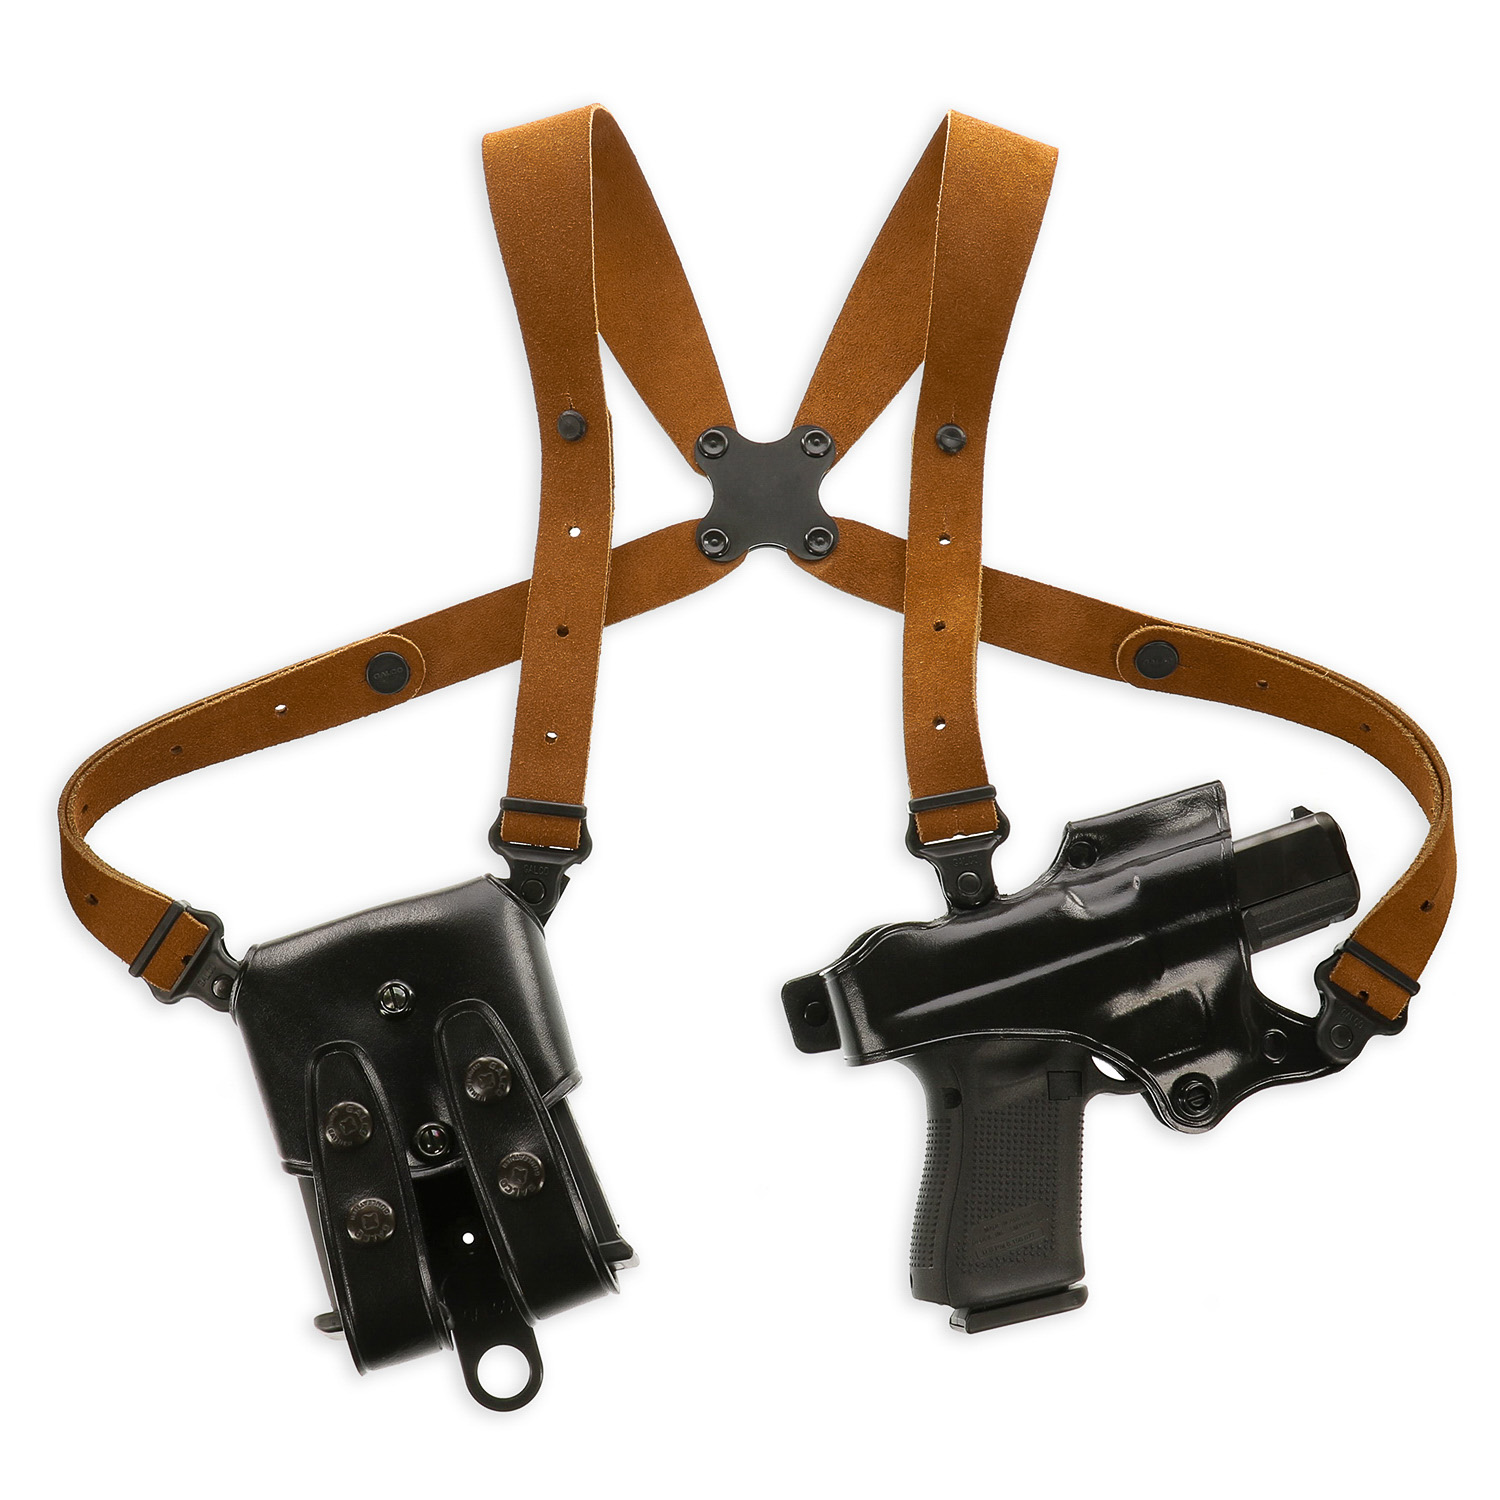 KCARRY shoulder handgun holster in black. 